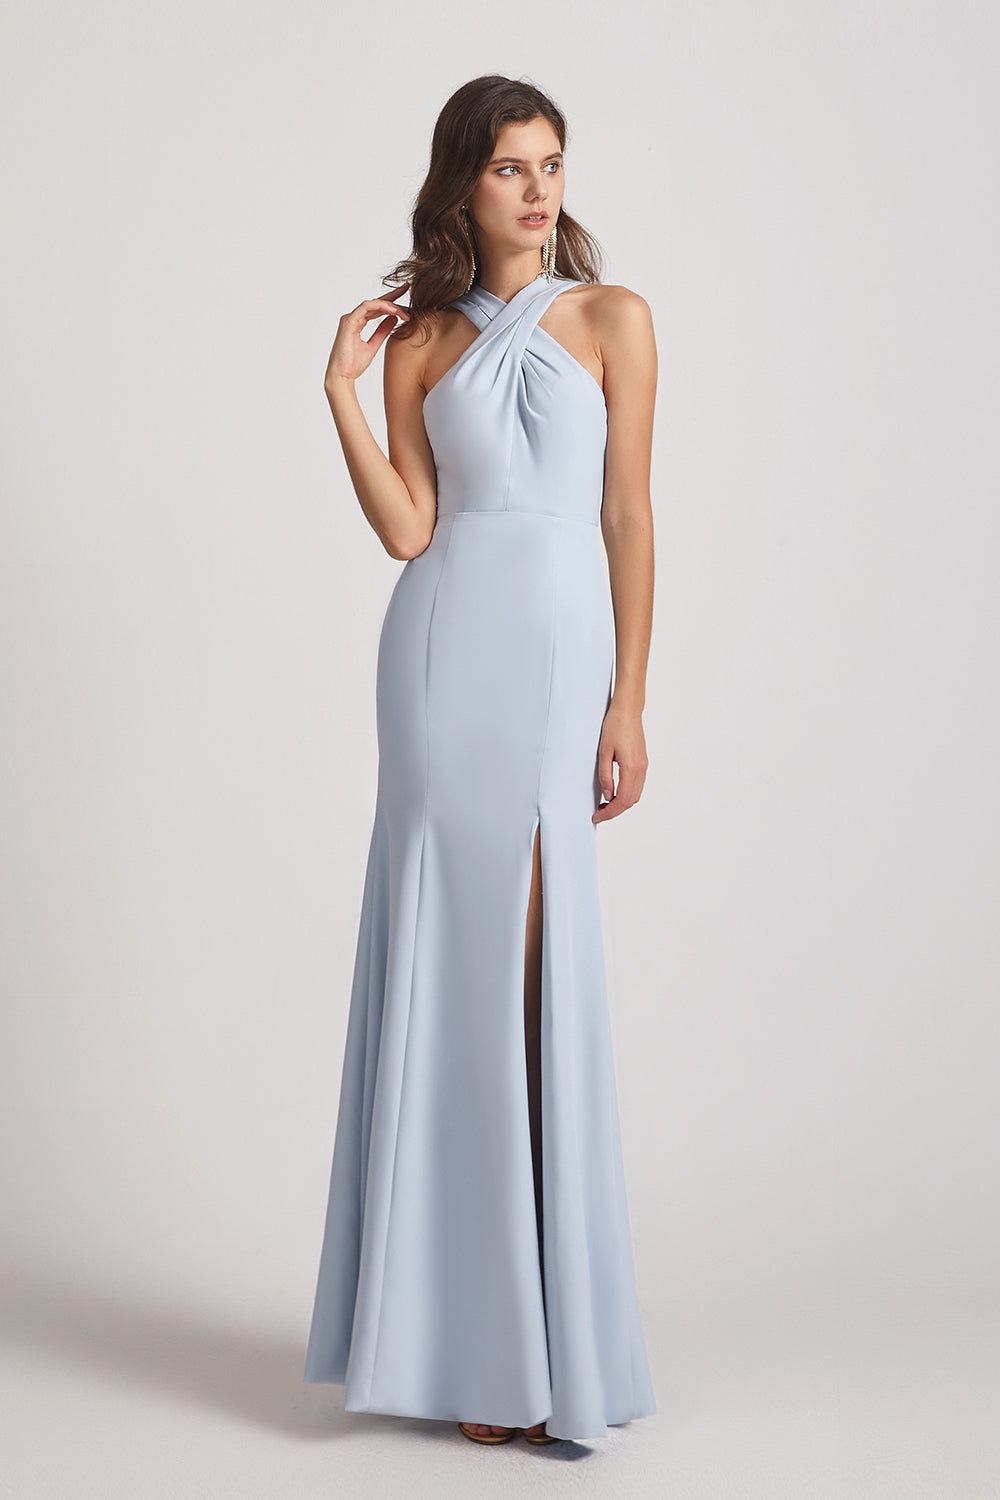 elegant bridesmaid dress in light blue